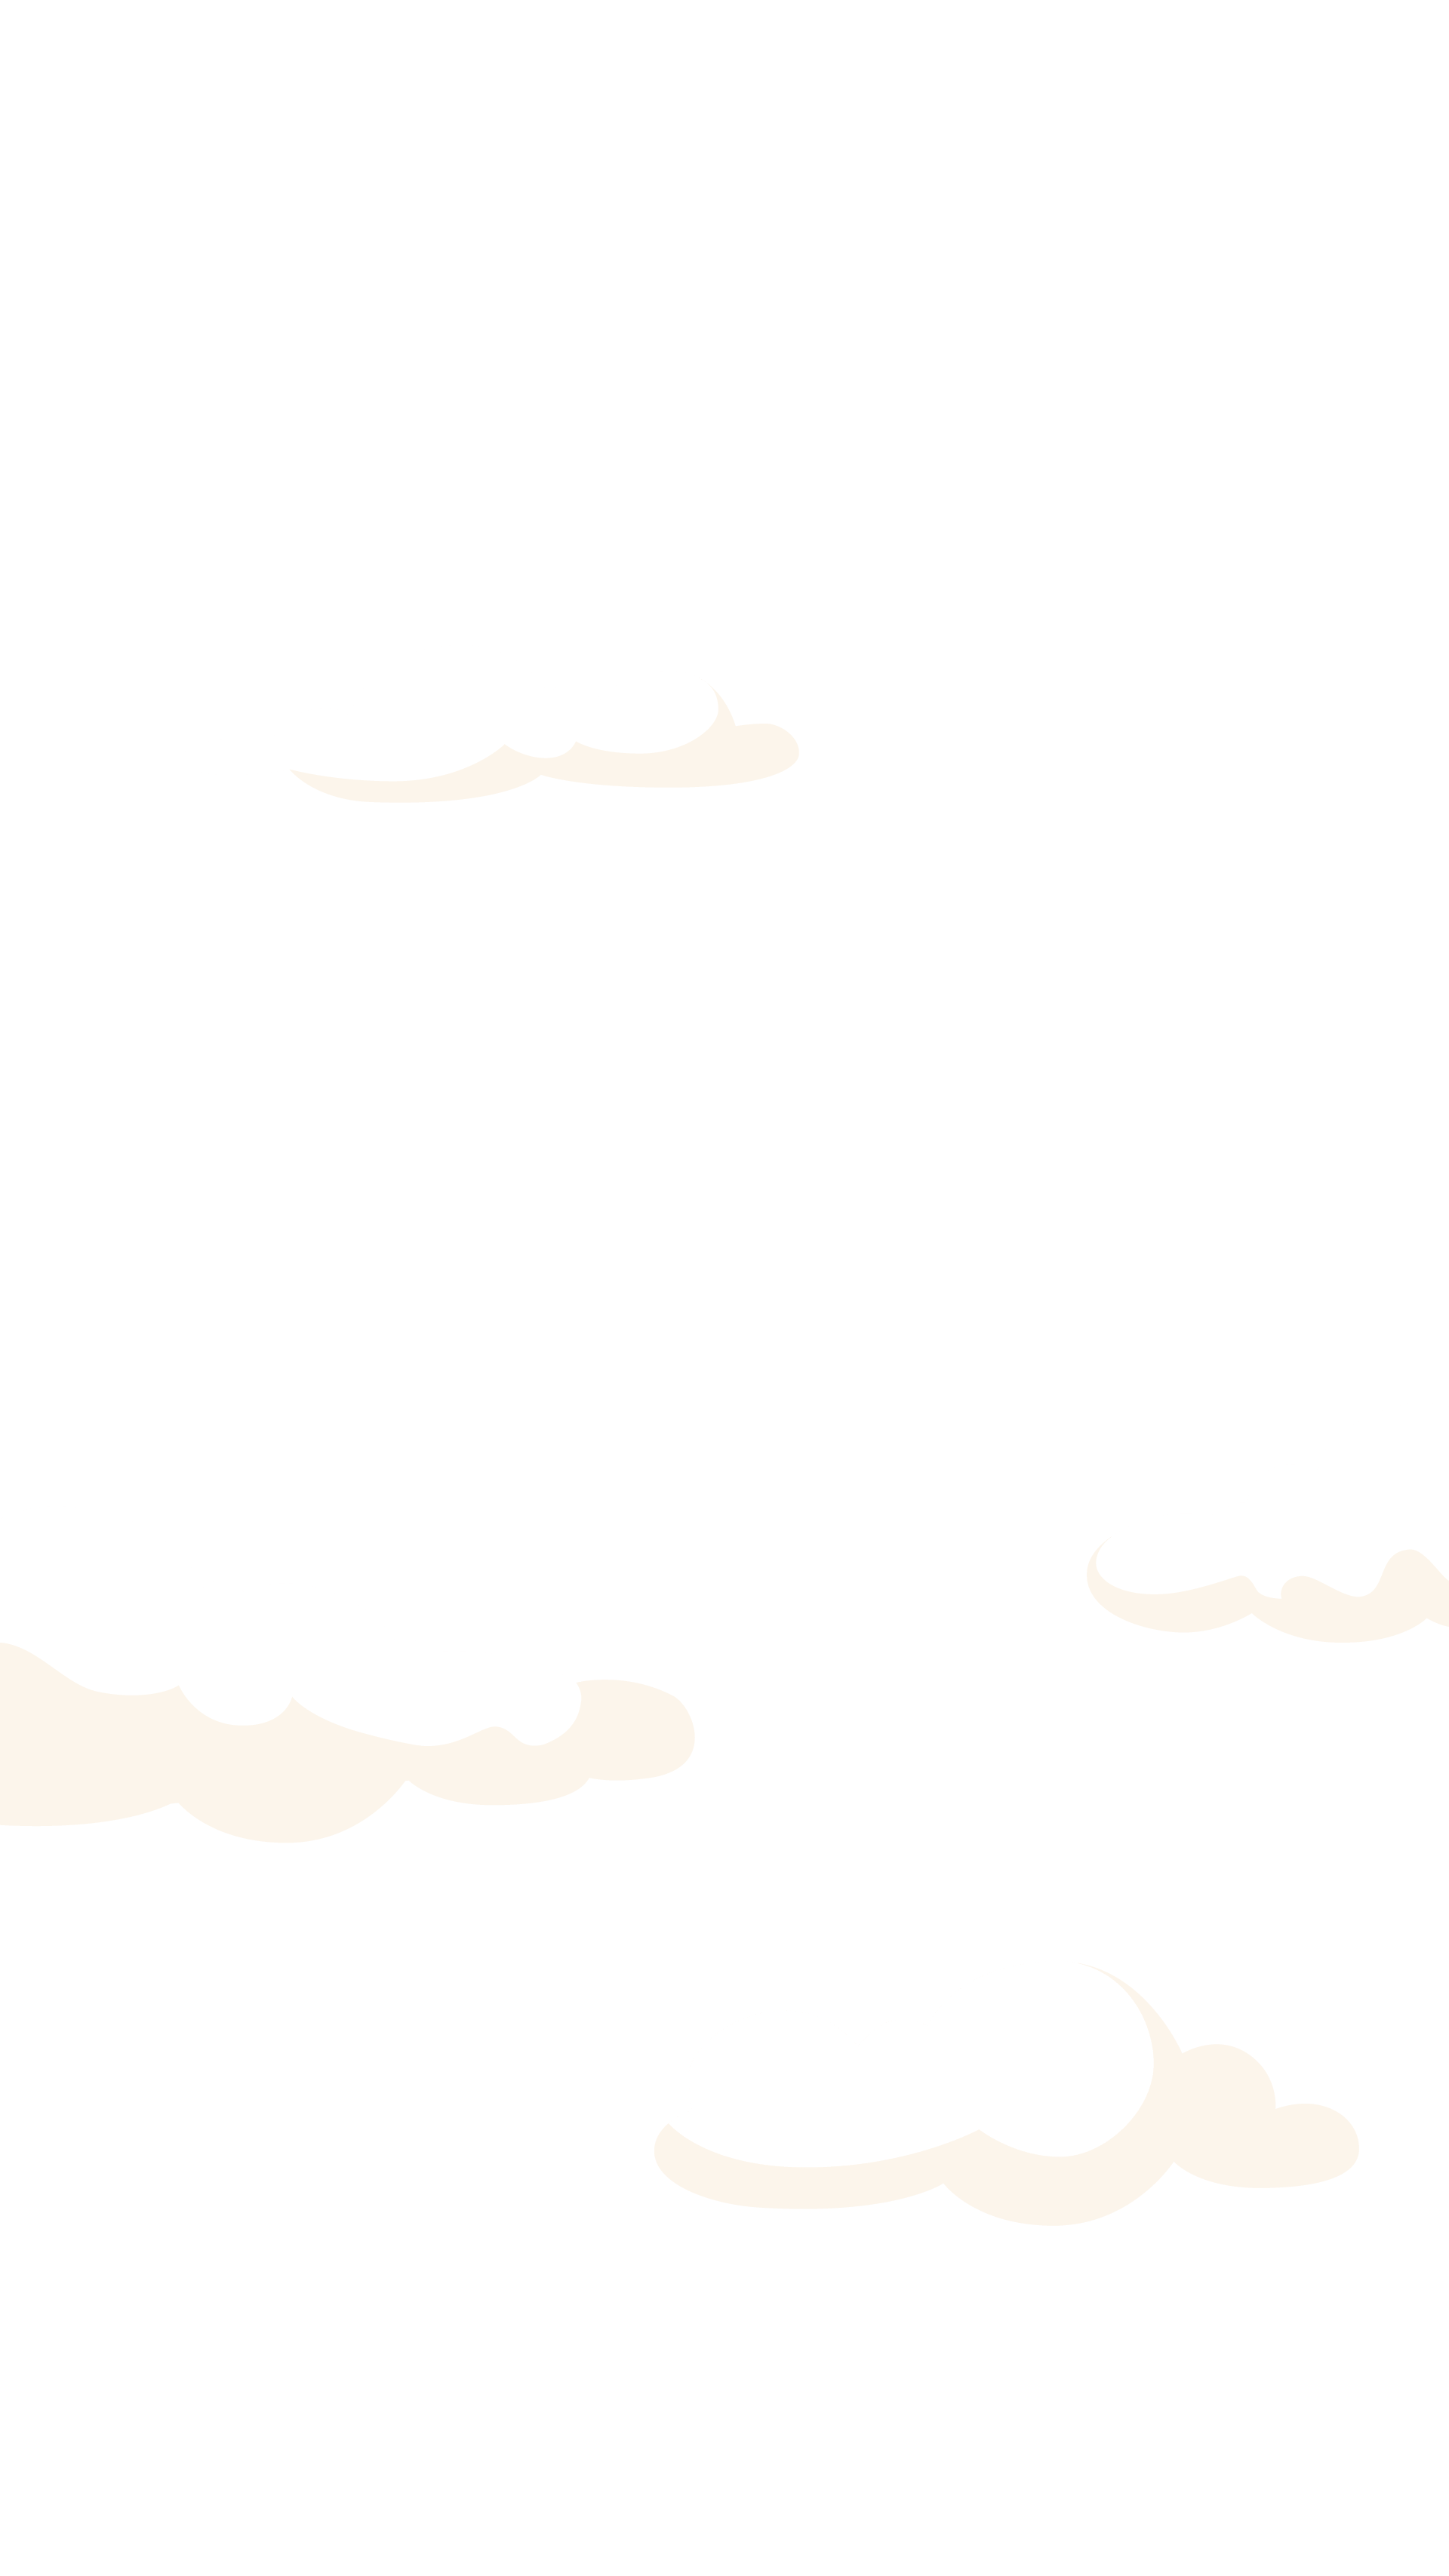 DaA_K1_Kapitola_Bg-Clouds